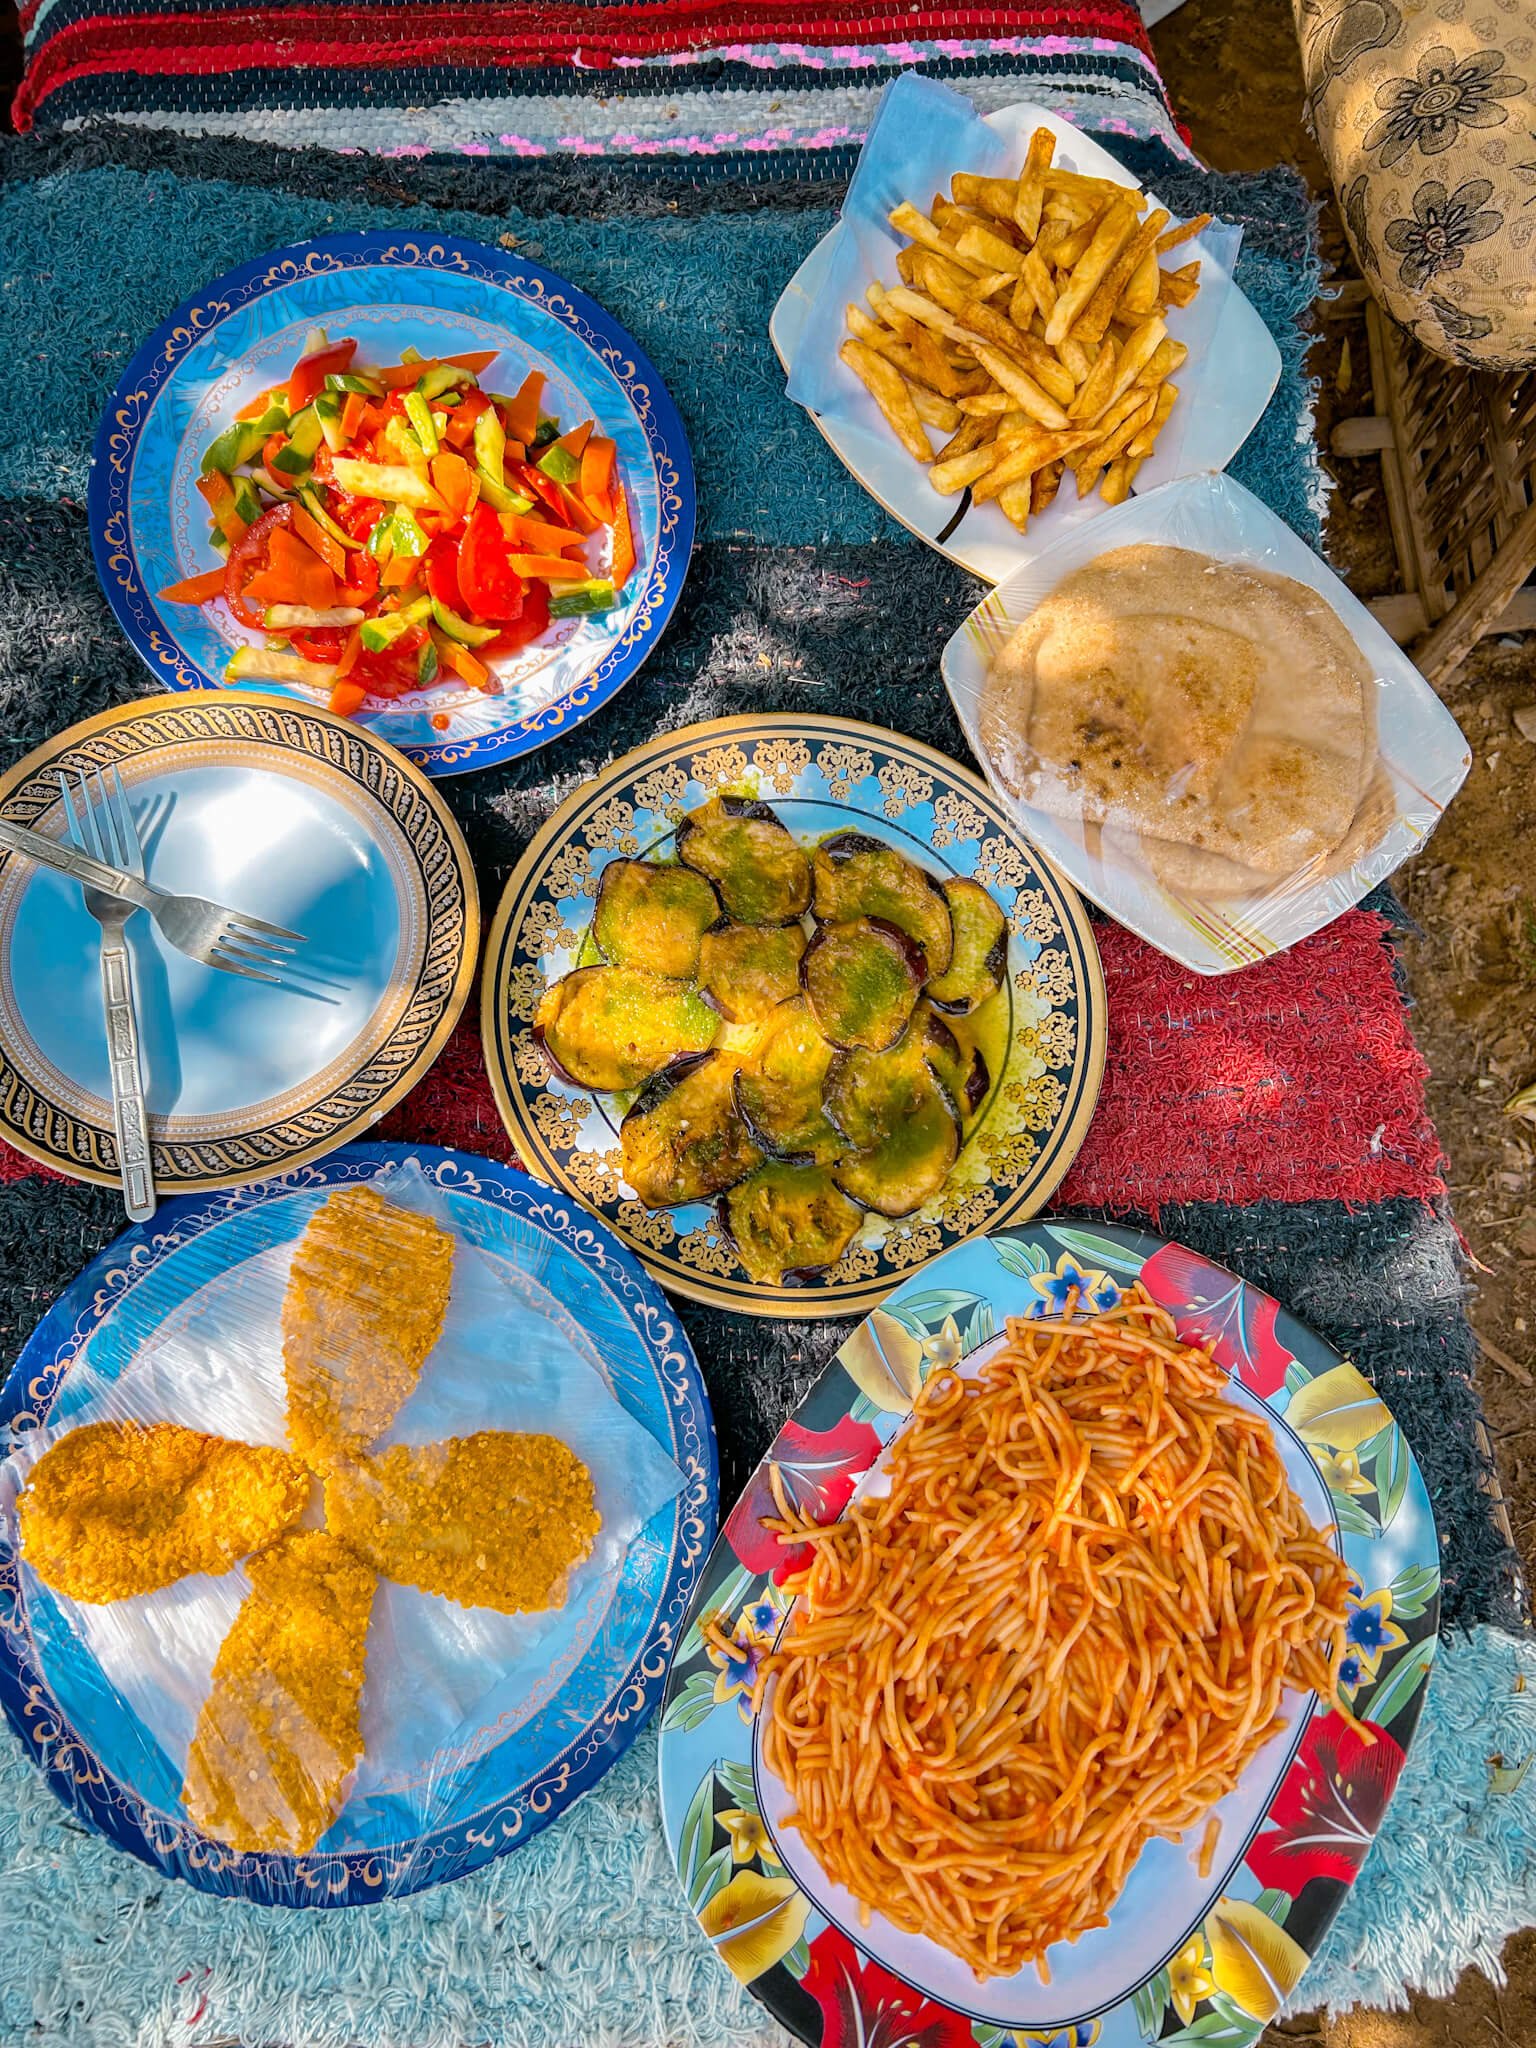 lunch at the white desert in Egypt